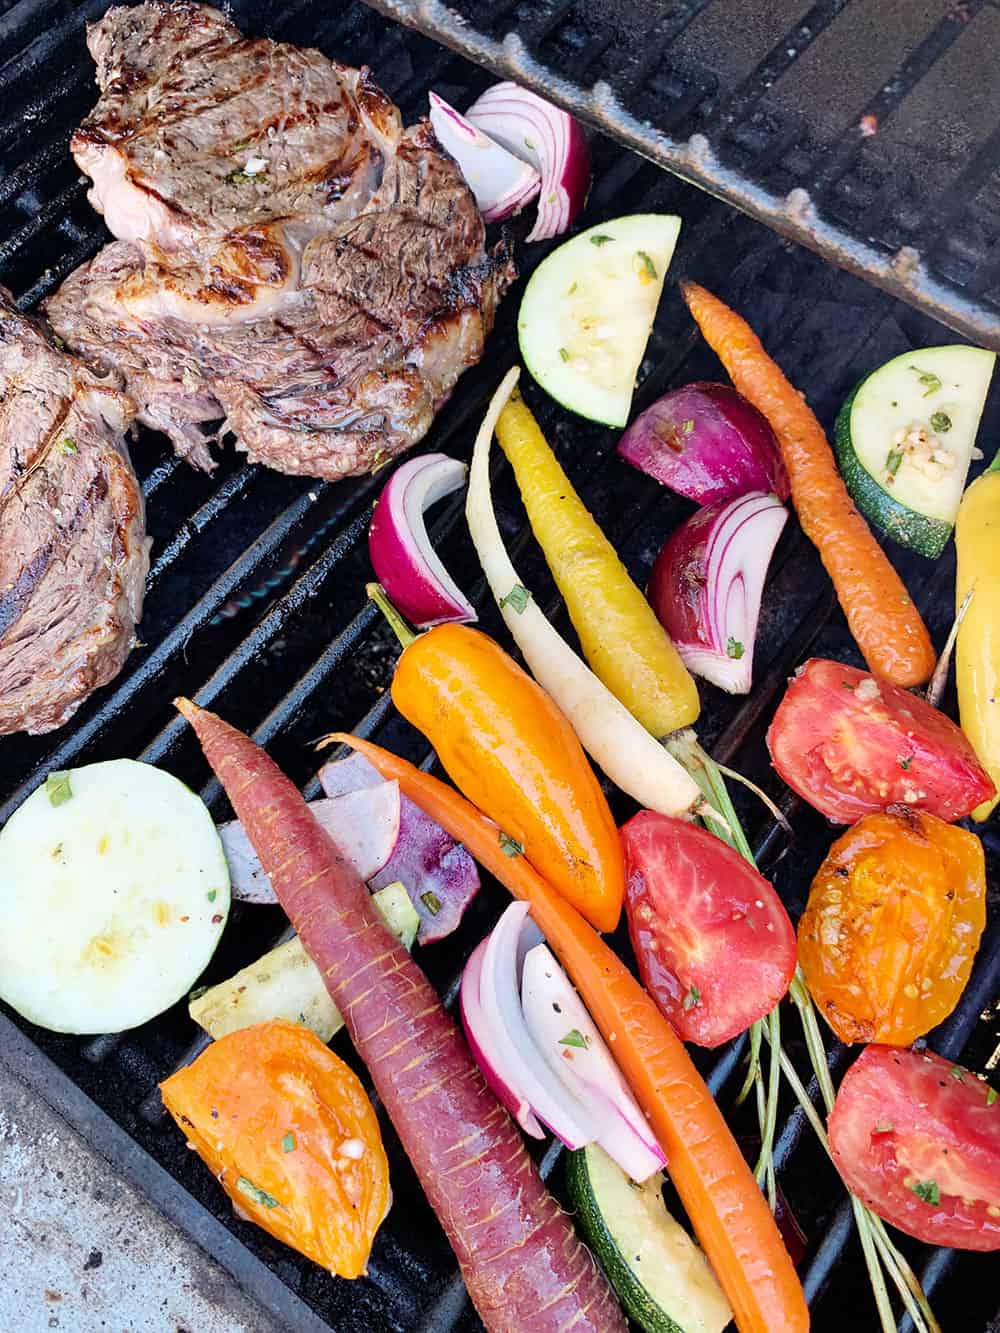 https://californiagrown.org/wp-content/uploads/2019/07/grilled-steak-and-veggies4.jpg